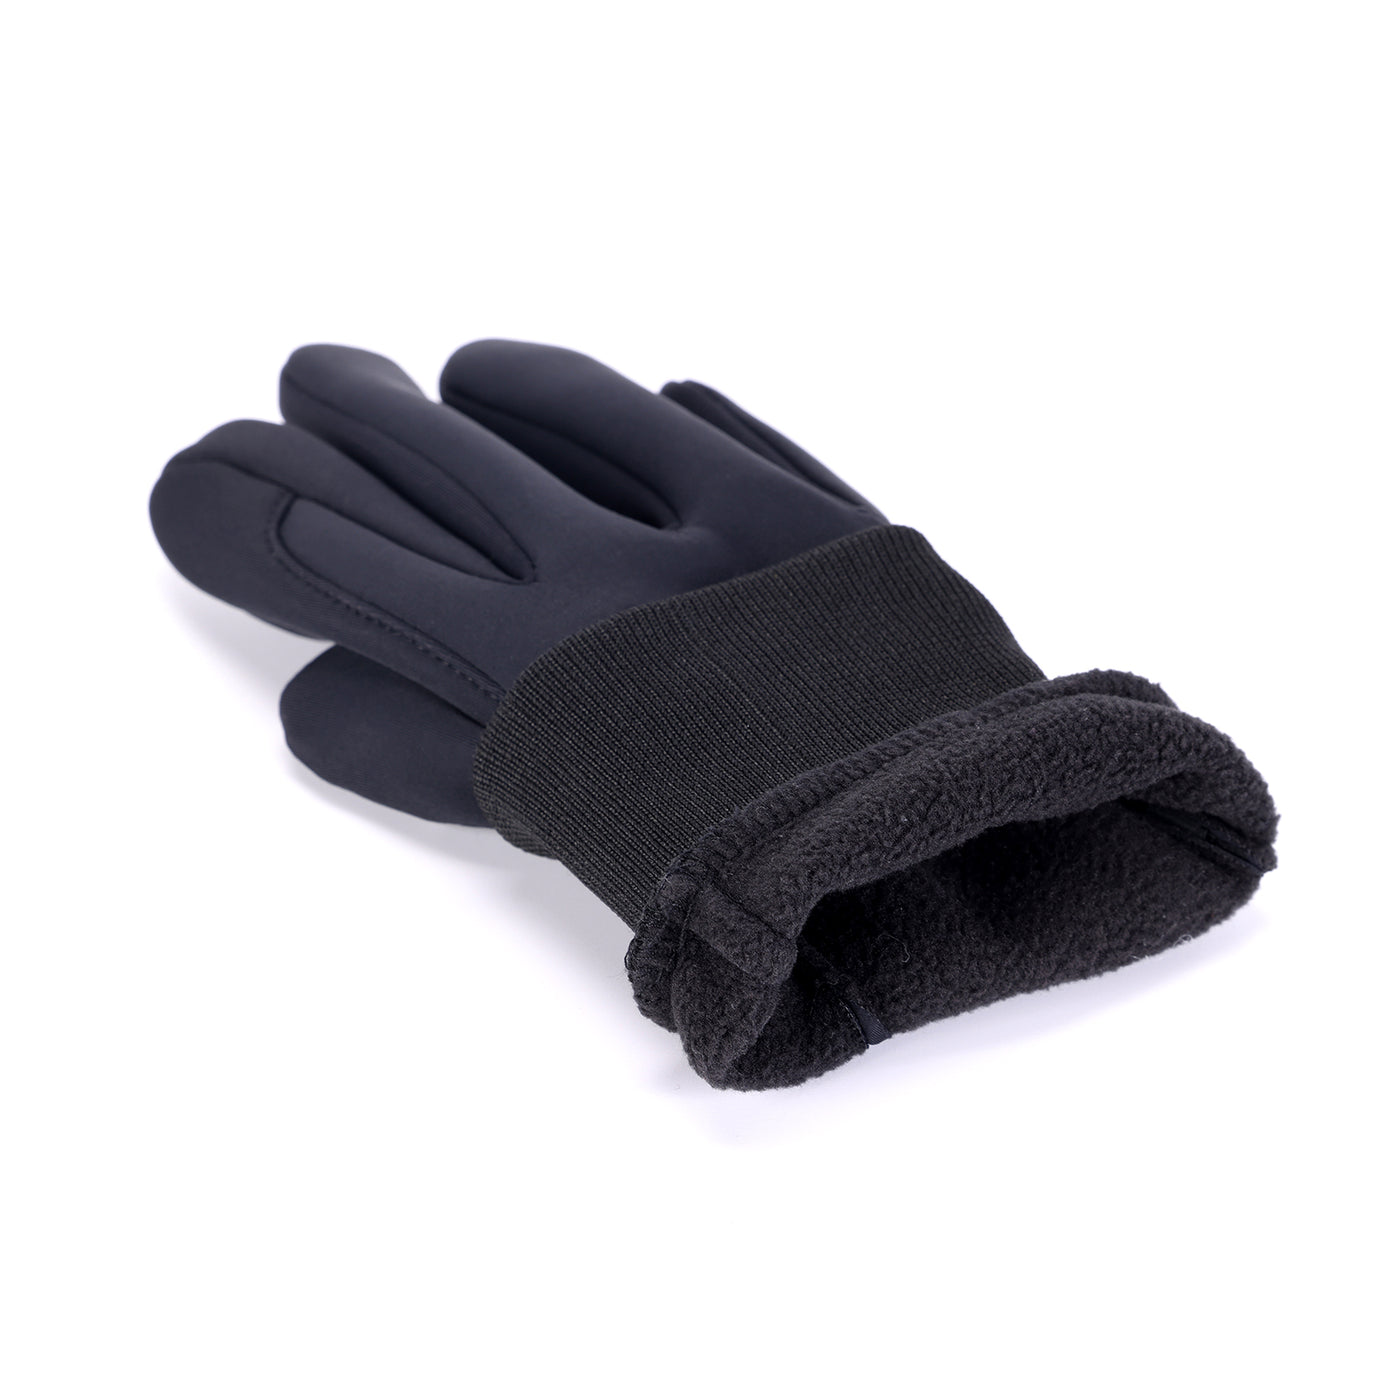 Eleglide Winter-Thermo handschuhe